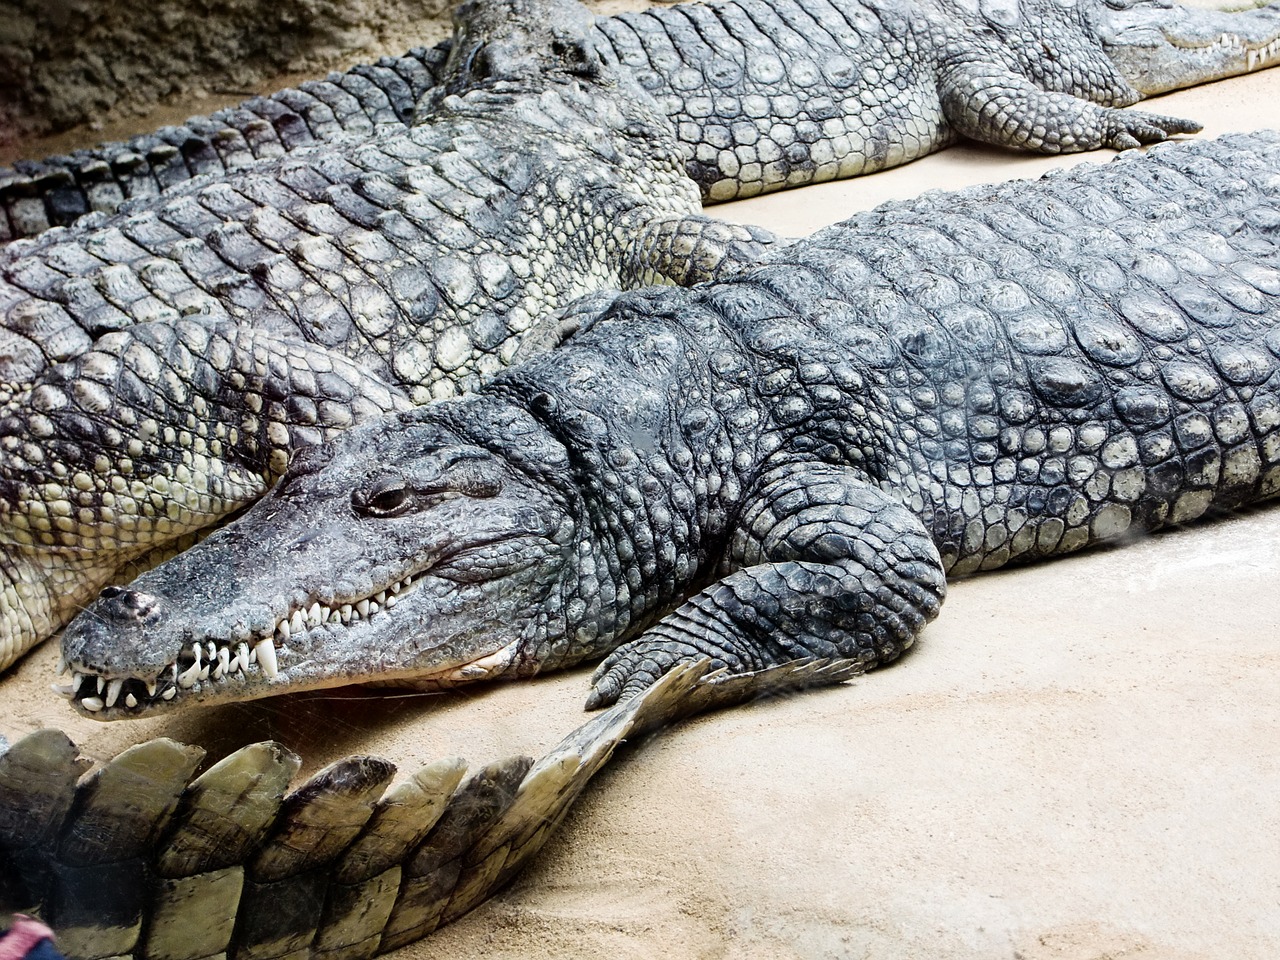 Download free photo of Alligator,crocodile,dangerous,reptile,animals ...